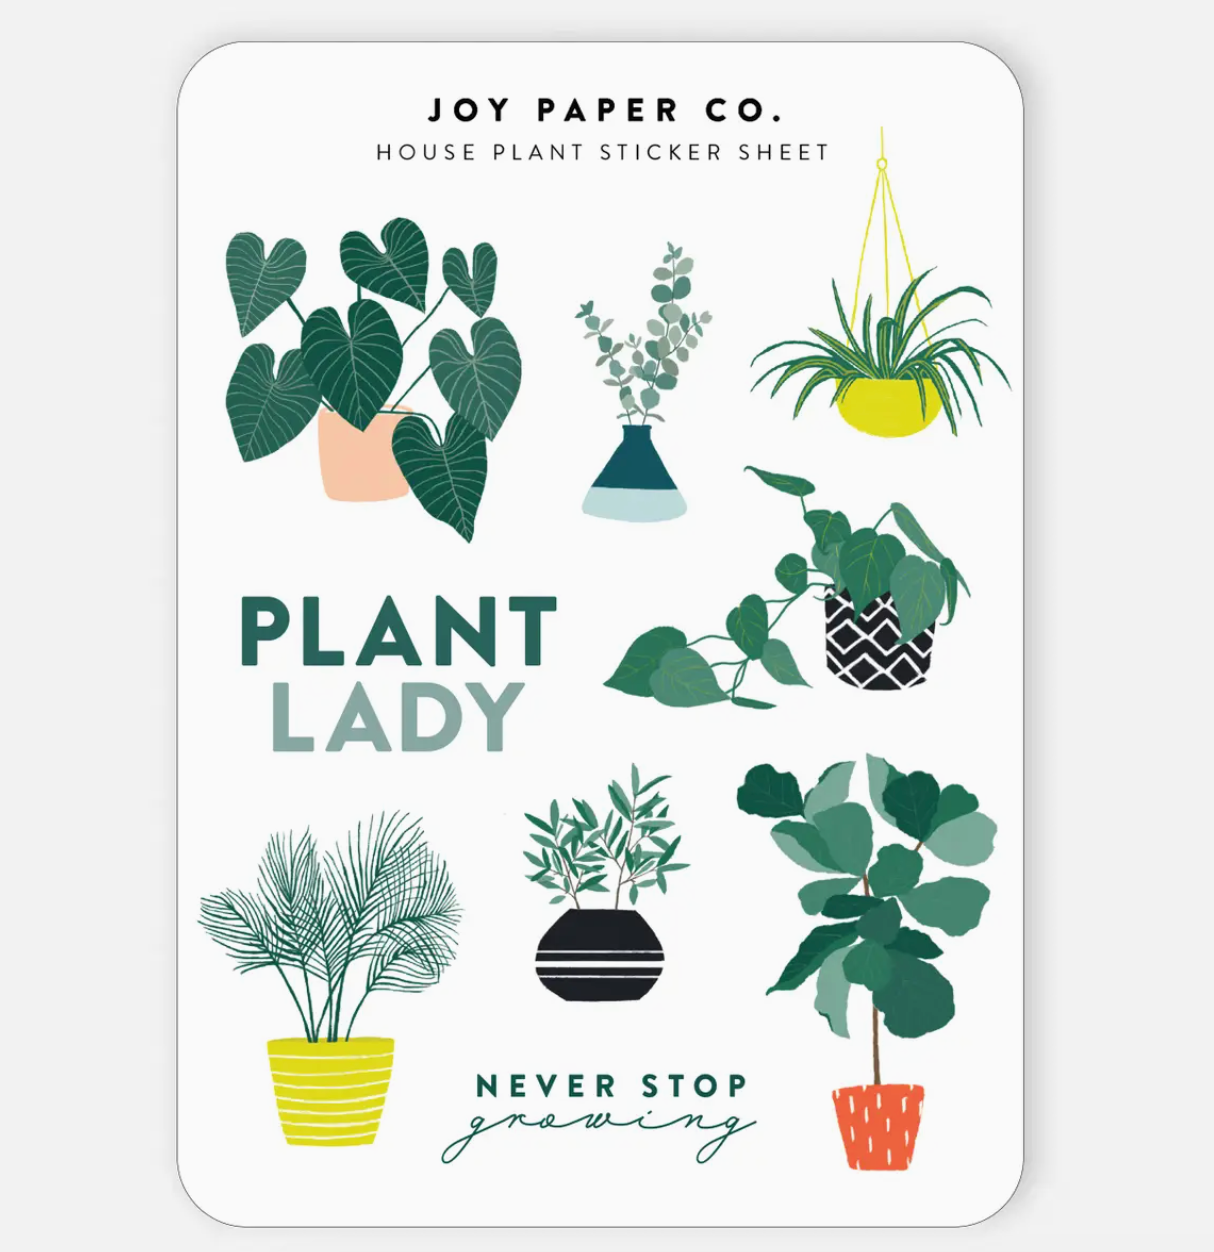 Sticker Sheets by Joy Paper Co.